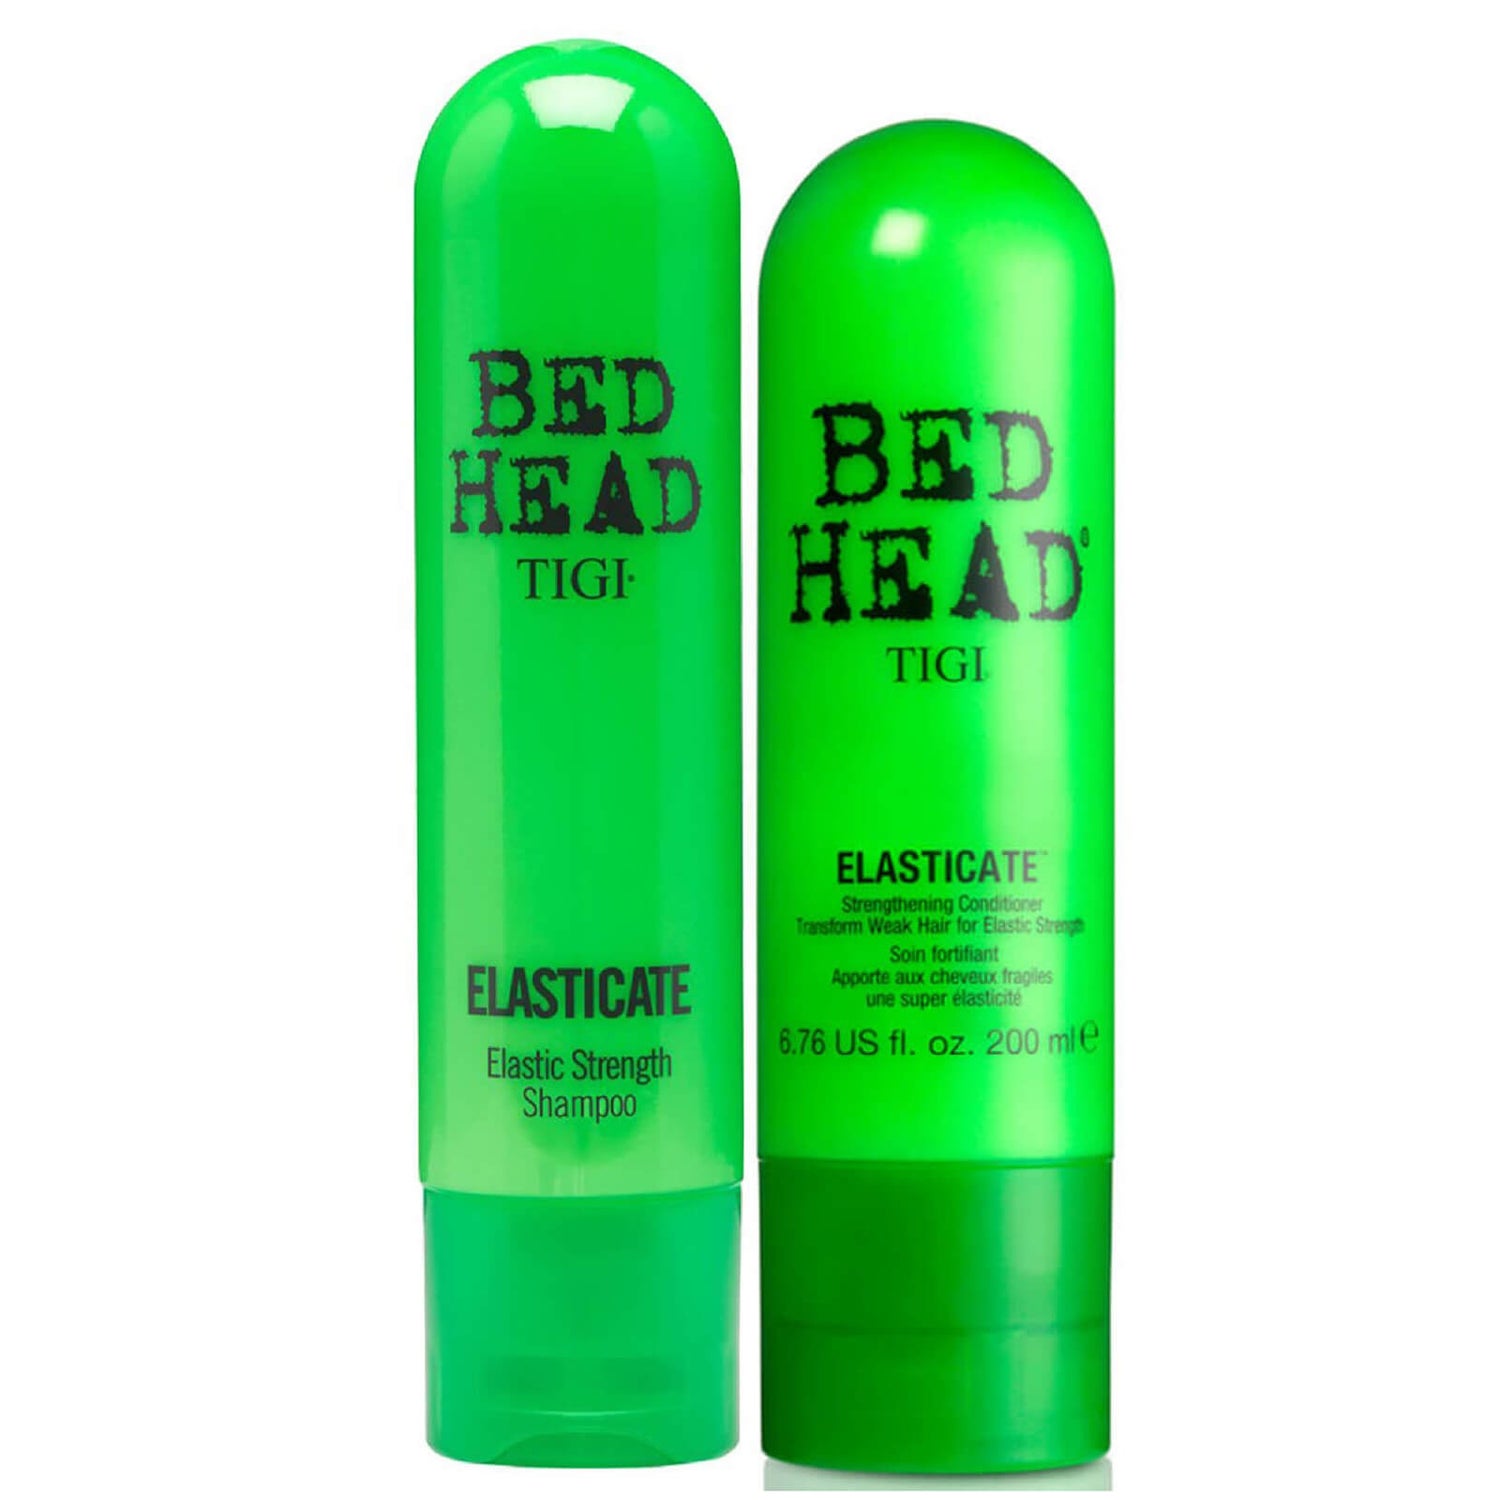 Bed Head Elasticate Shampoo & Conditioner